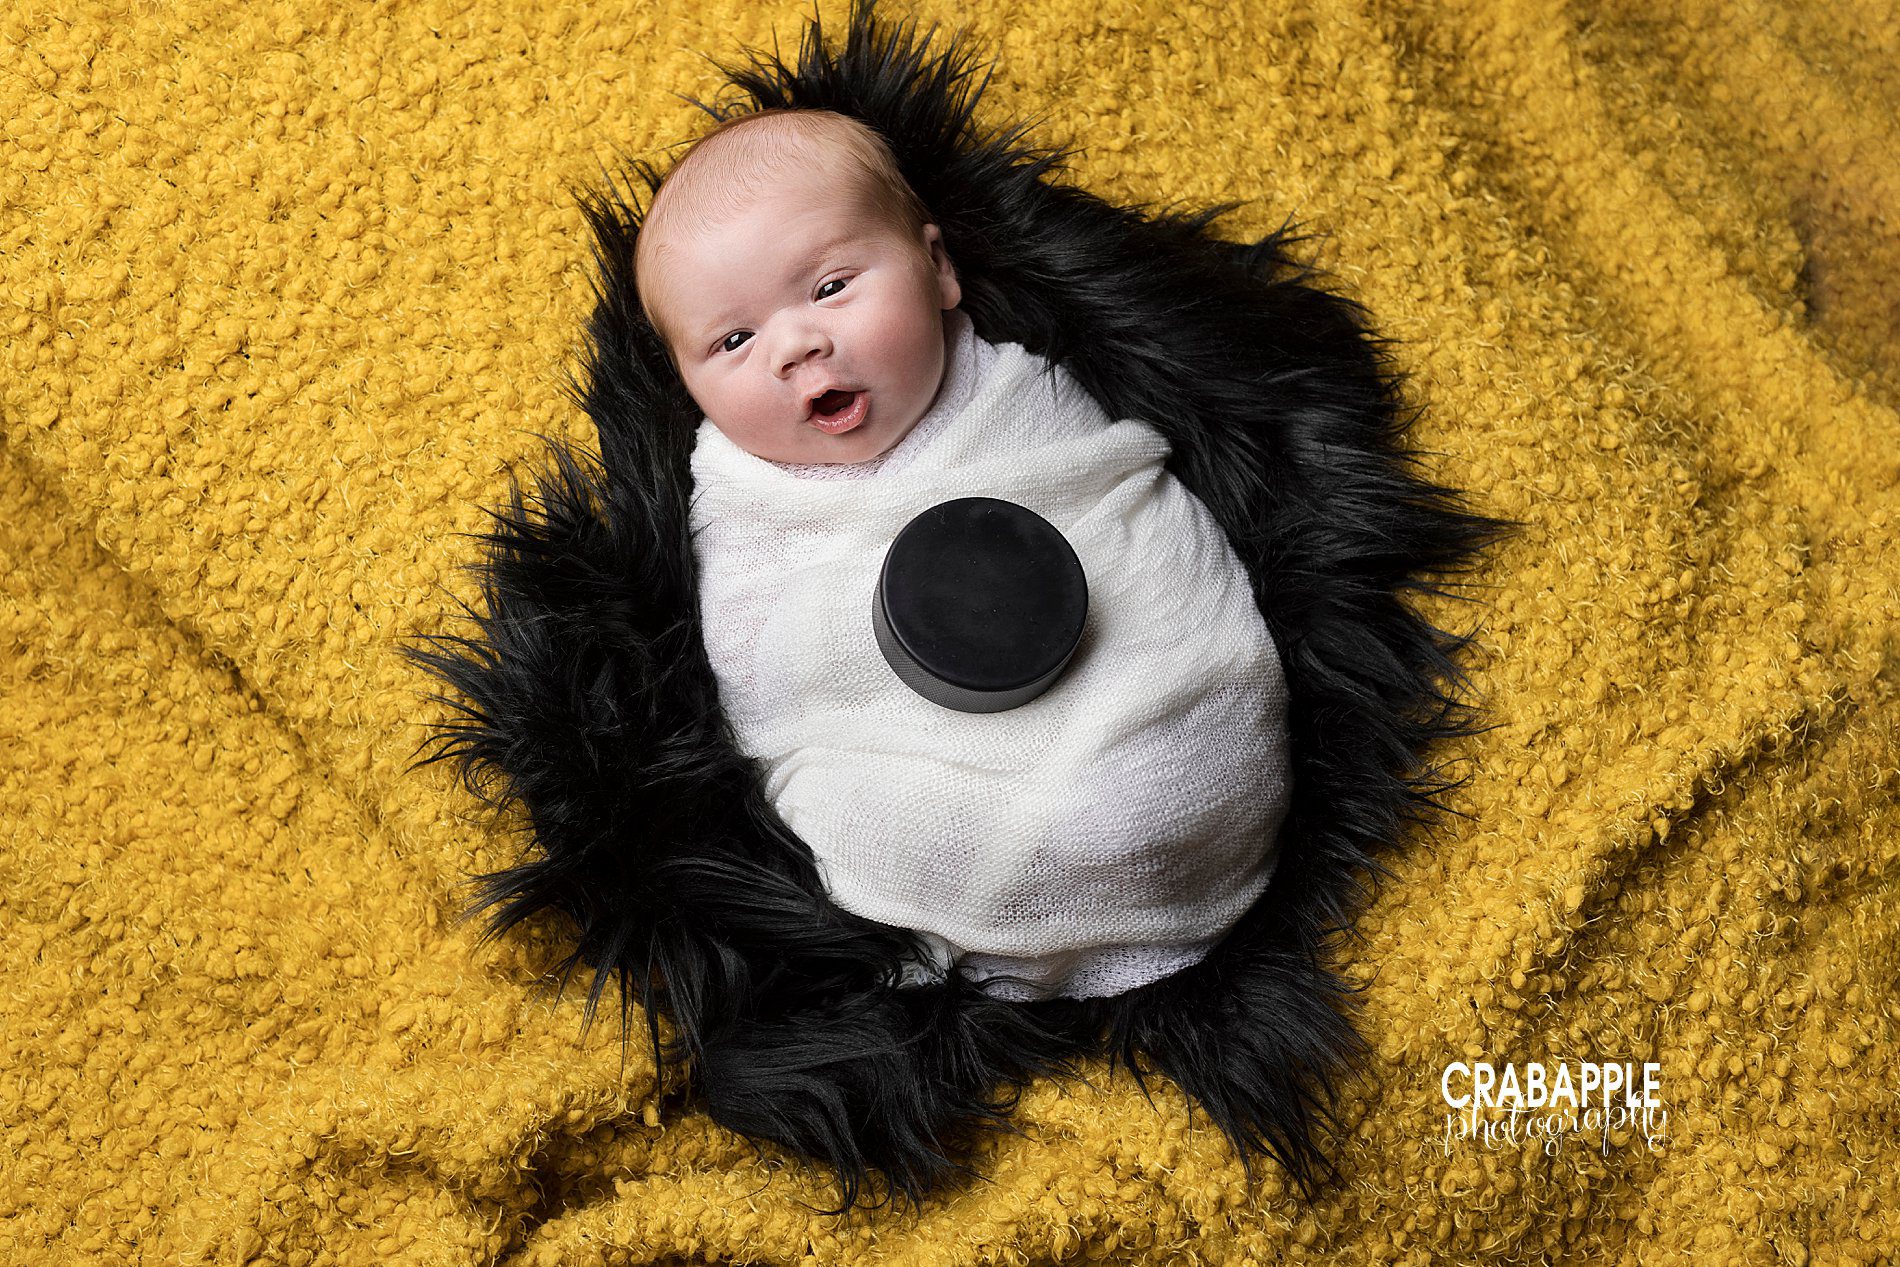 Inspiration for subtle Boston Bruins themed newborn photos